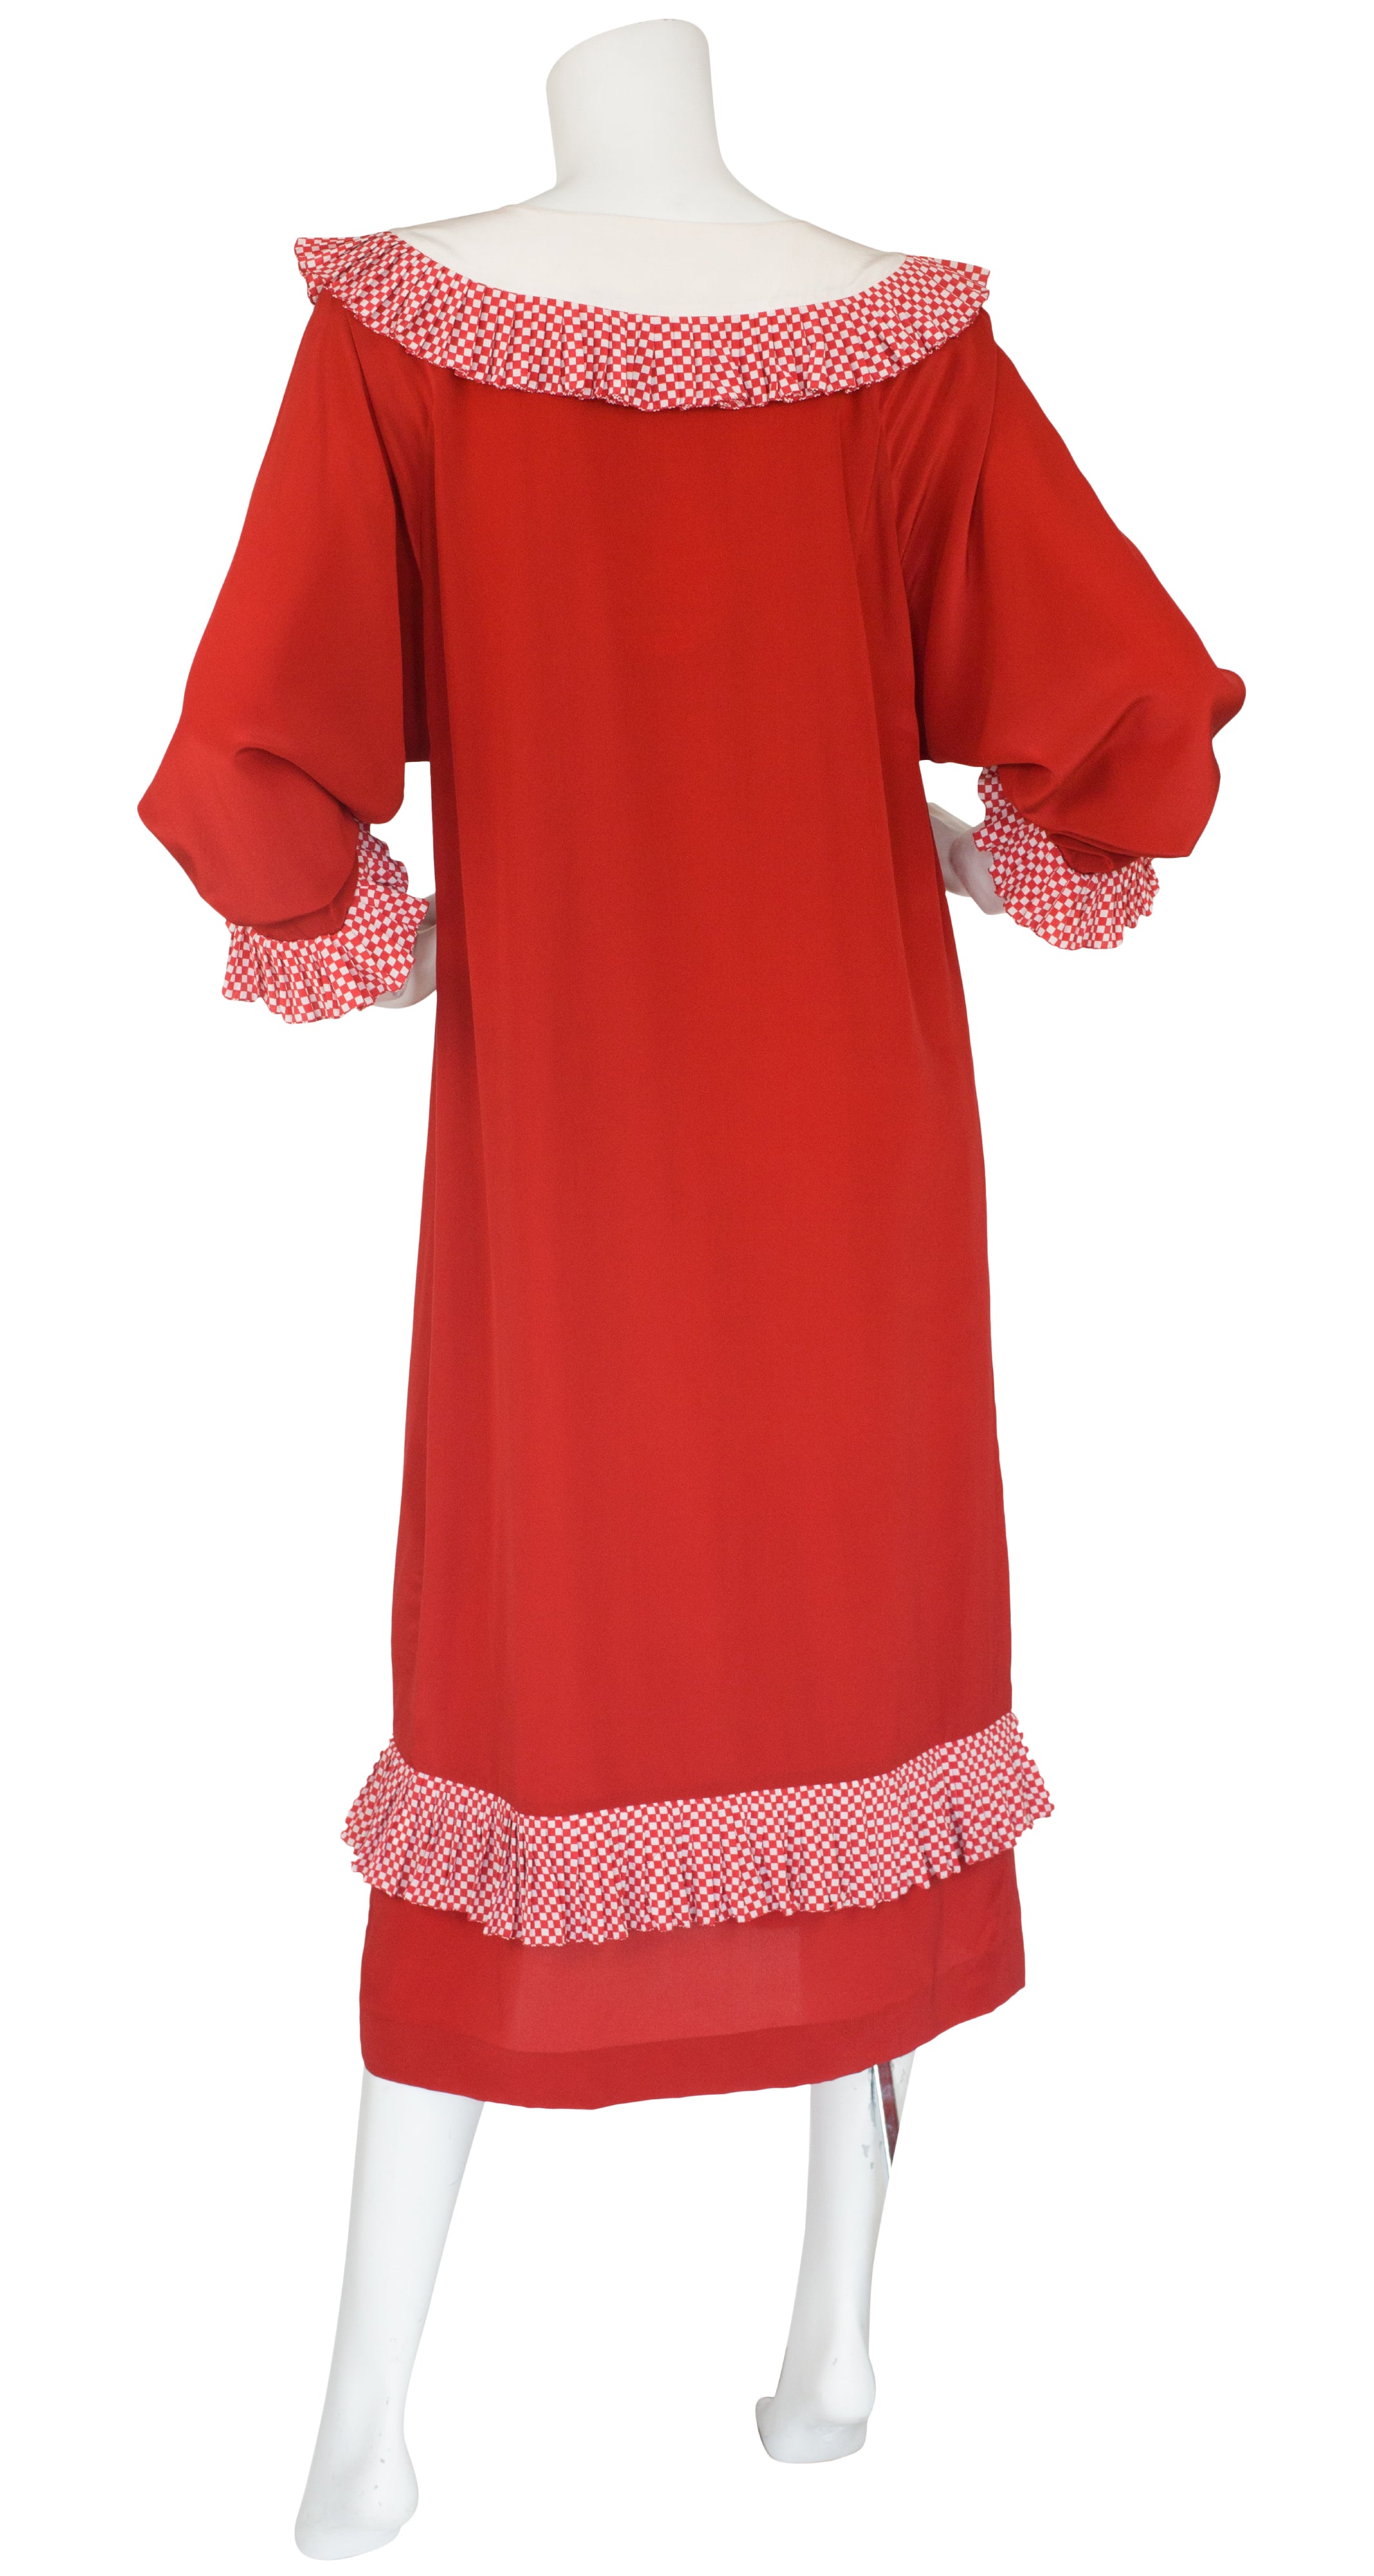 Chloé by Karl Lagerfeld 1980s NWT Red Checkered Ruffle Silk Dress ...